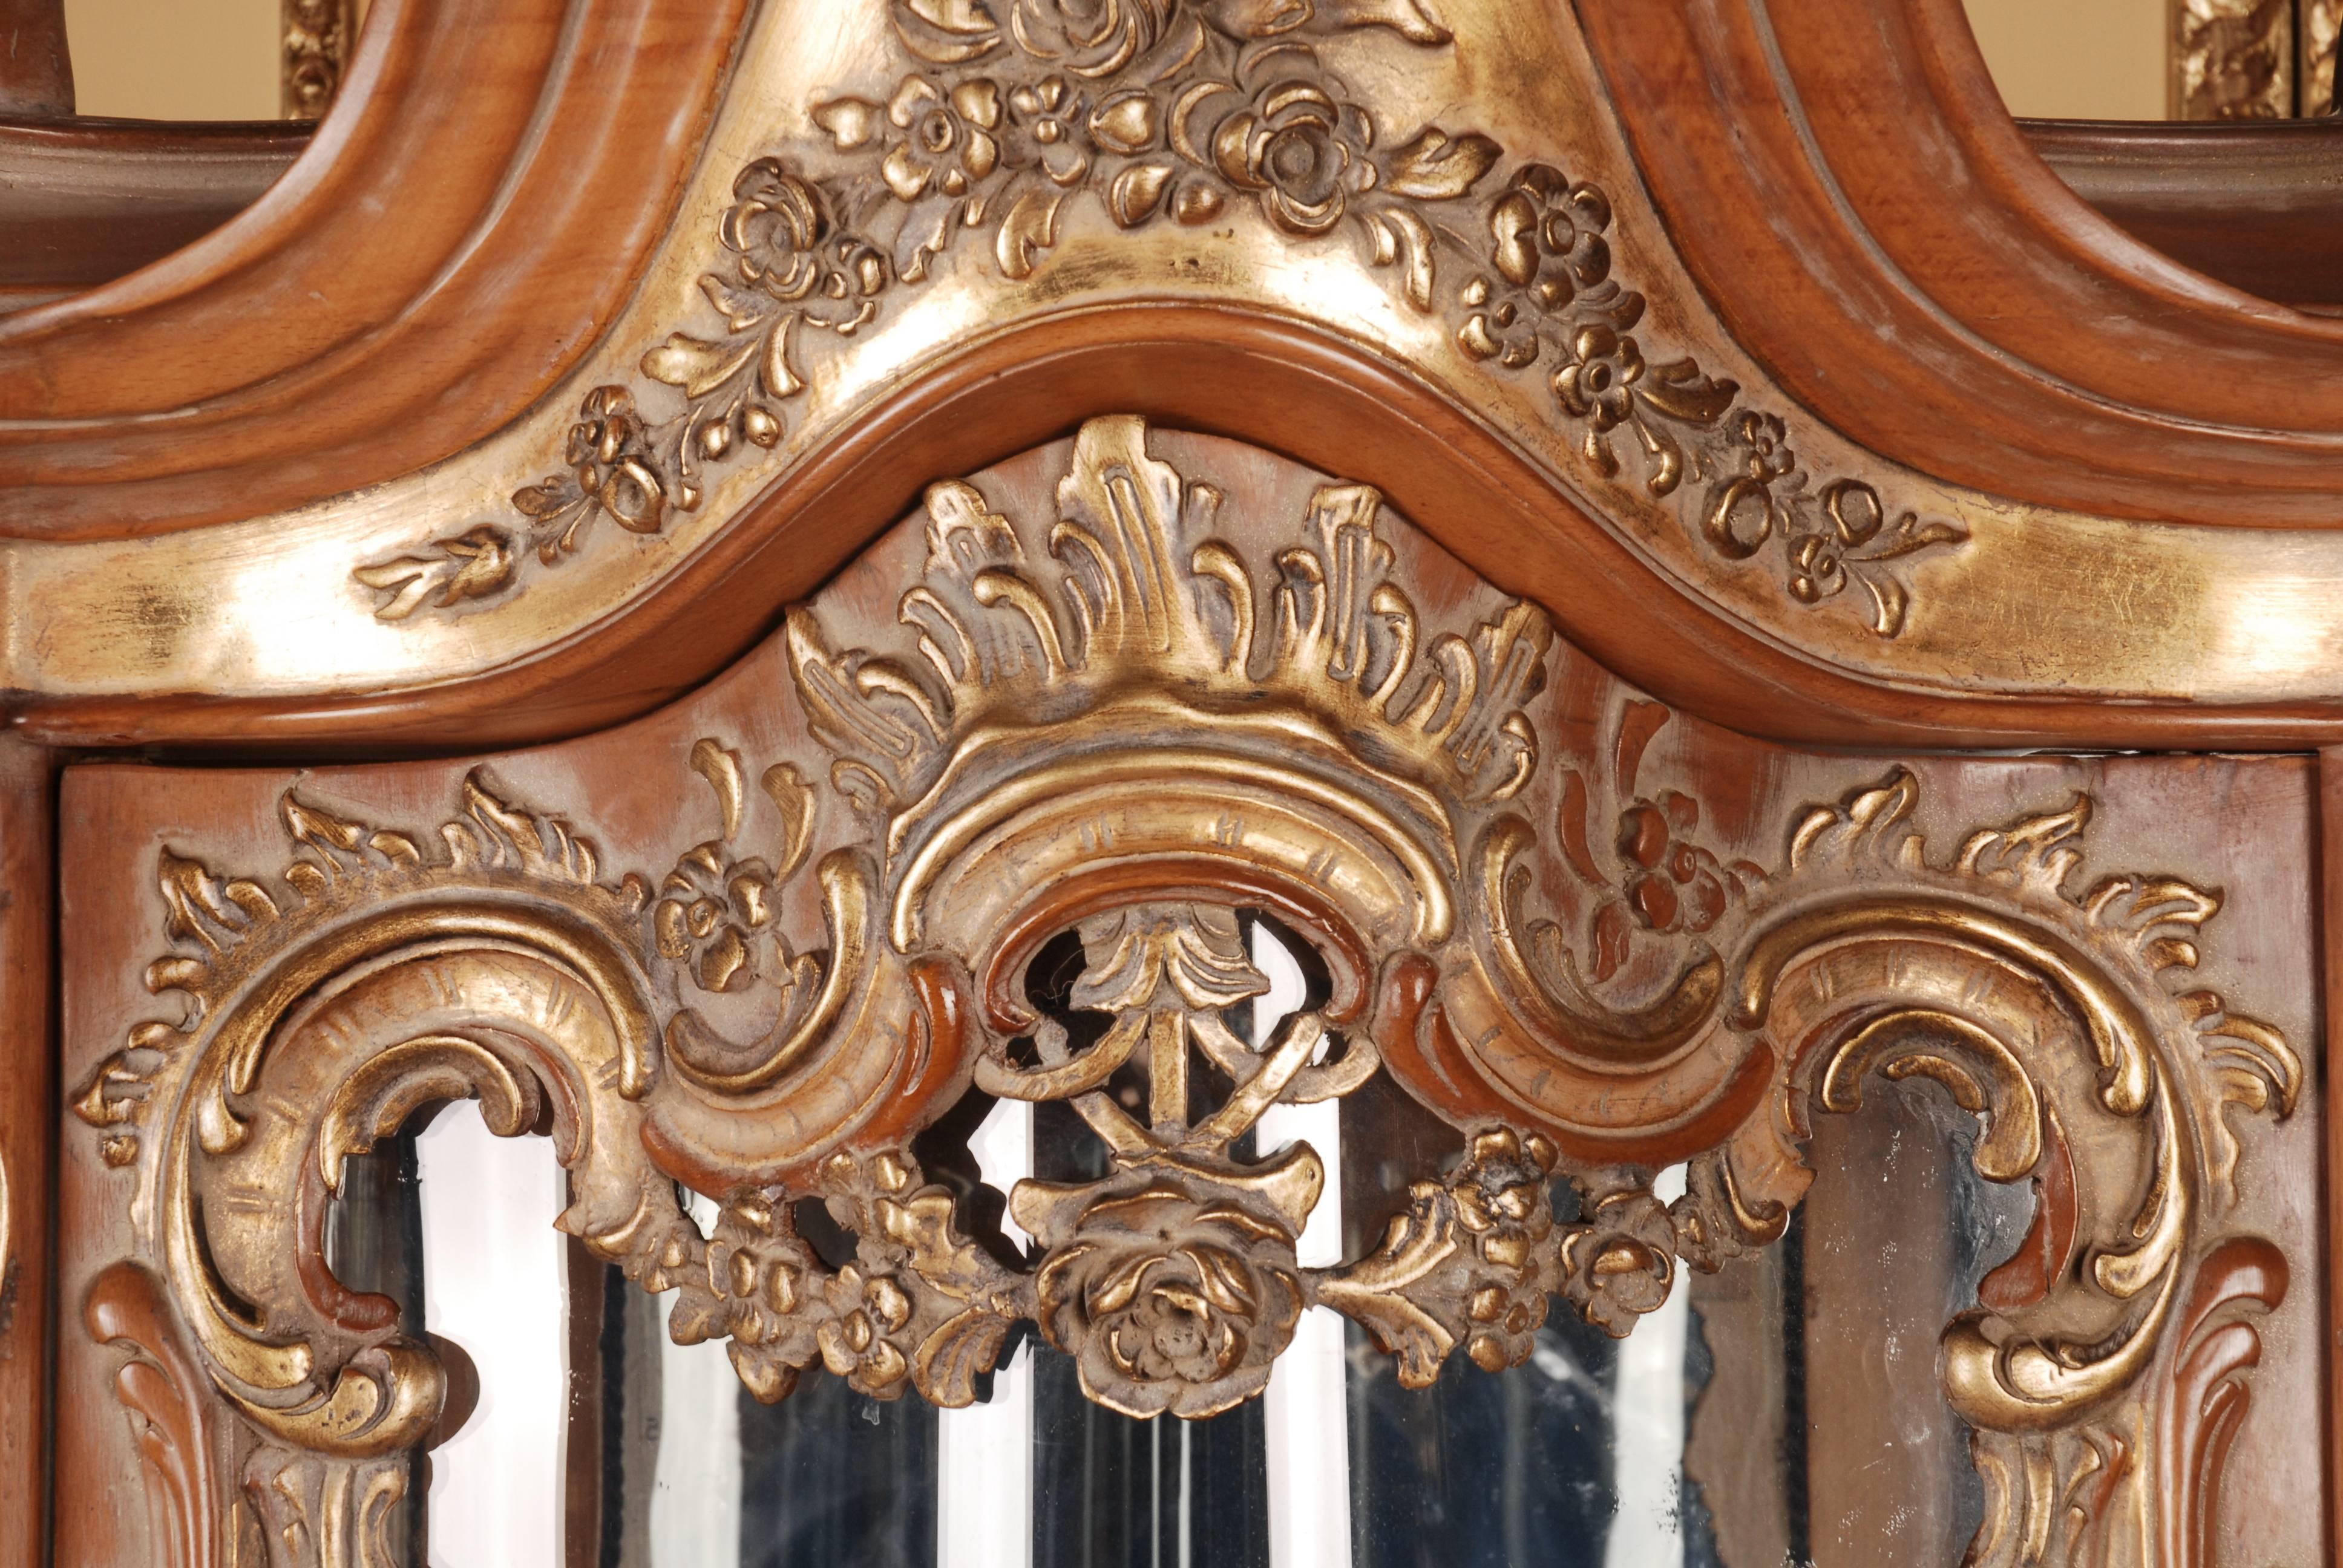 20th Century Splendid Display Cabinet in the Rococo Style (Rokoko)